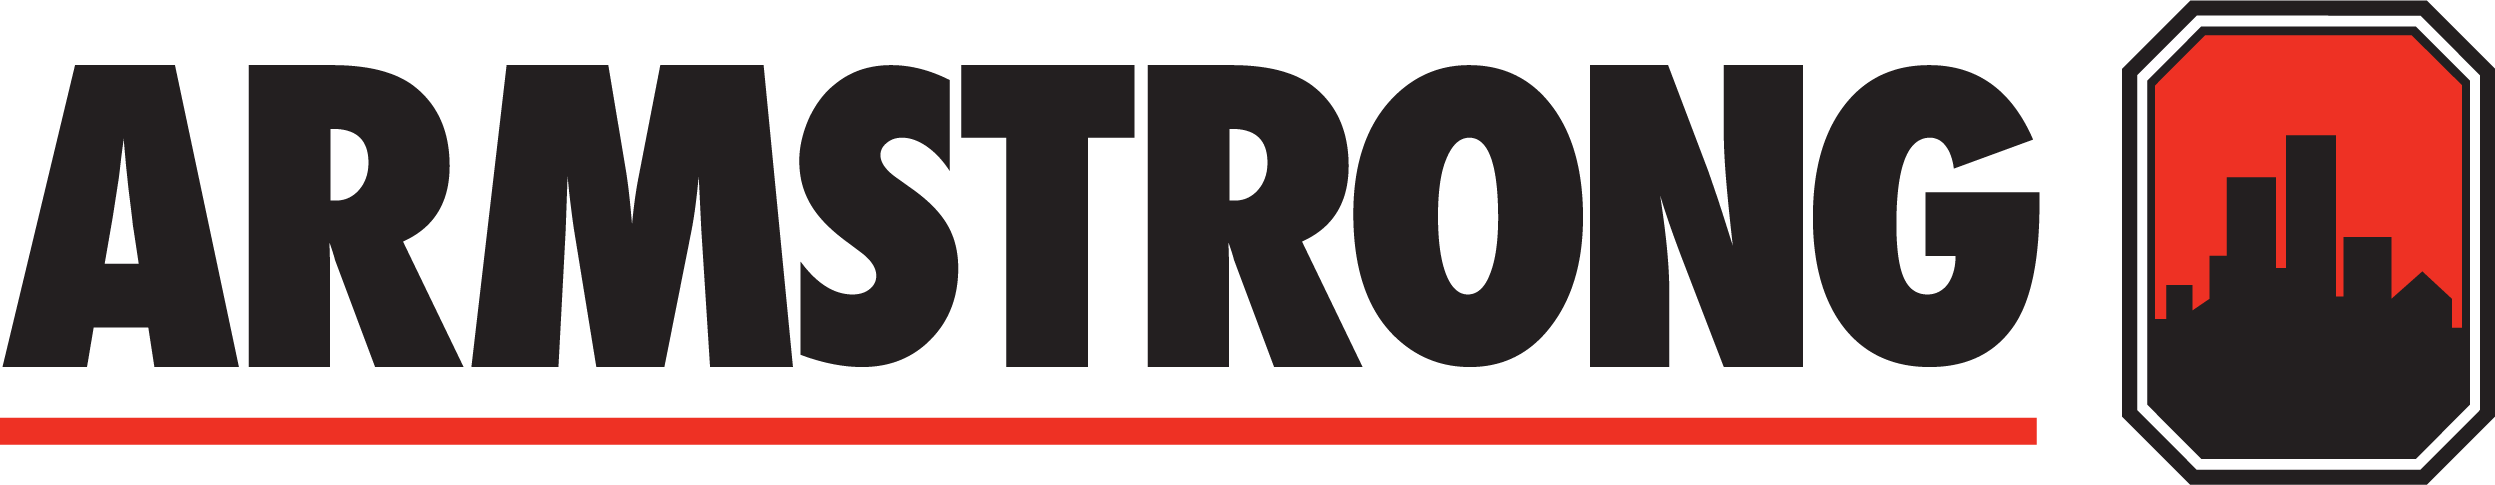 Armstrong Brand Logo